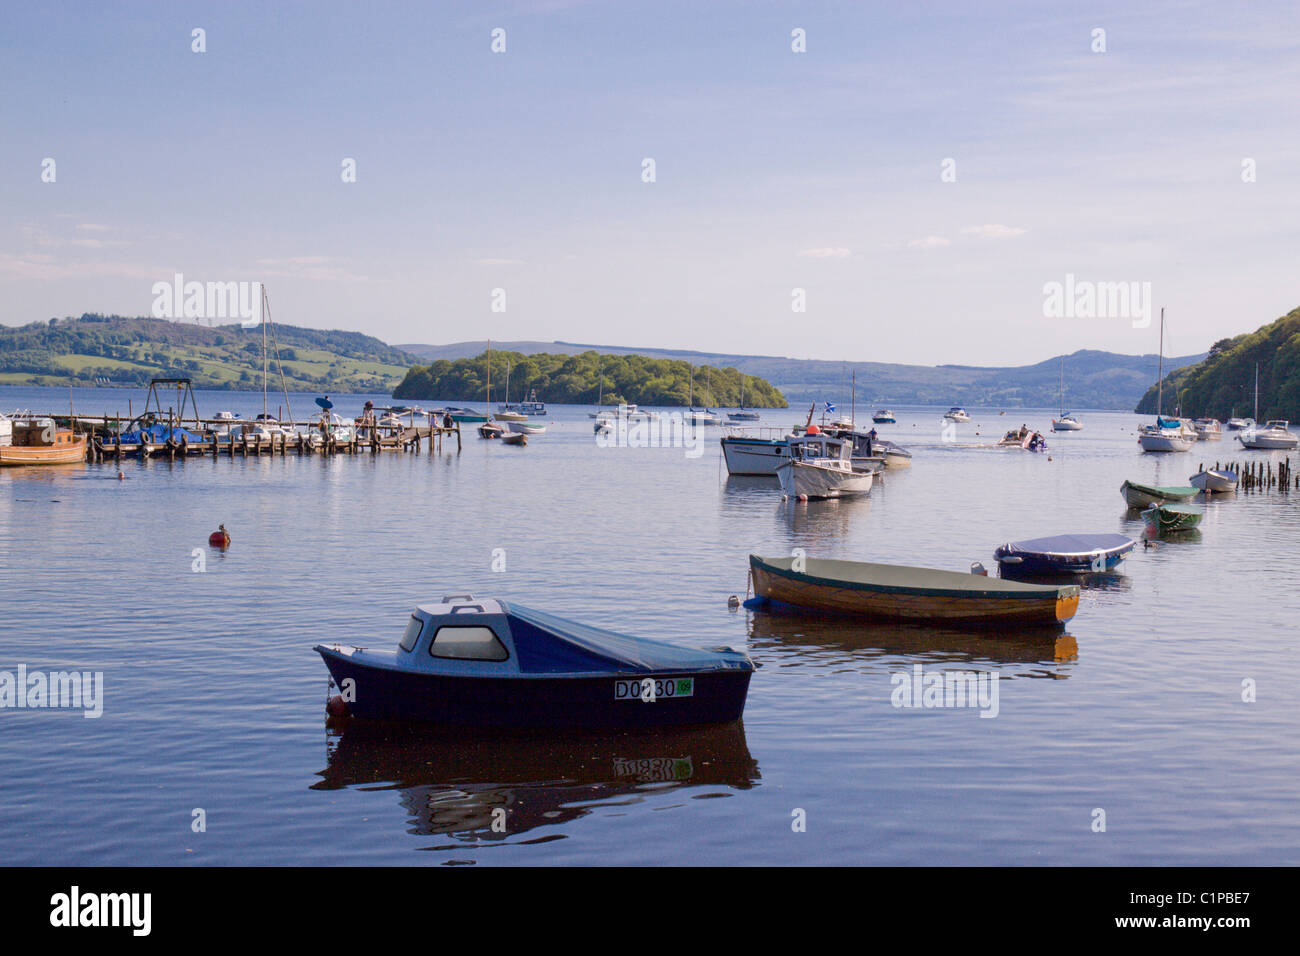 Scotland, Loch Lomond, Balmaha, boats in harbour Stock Photo